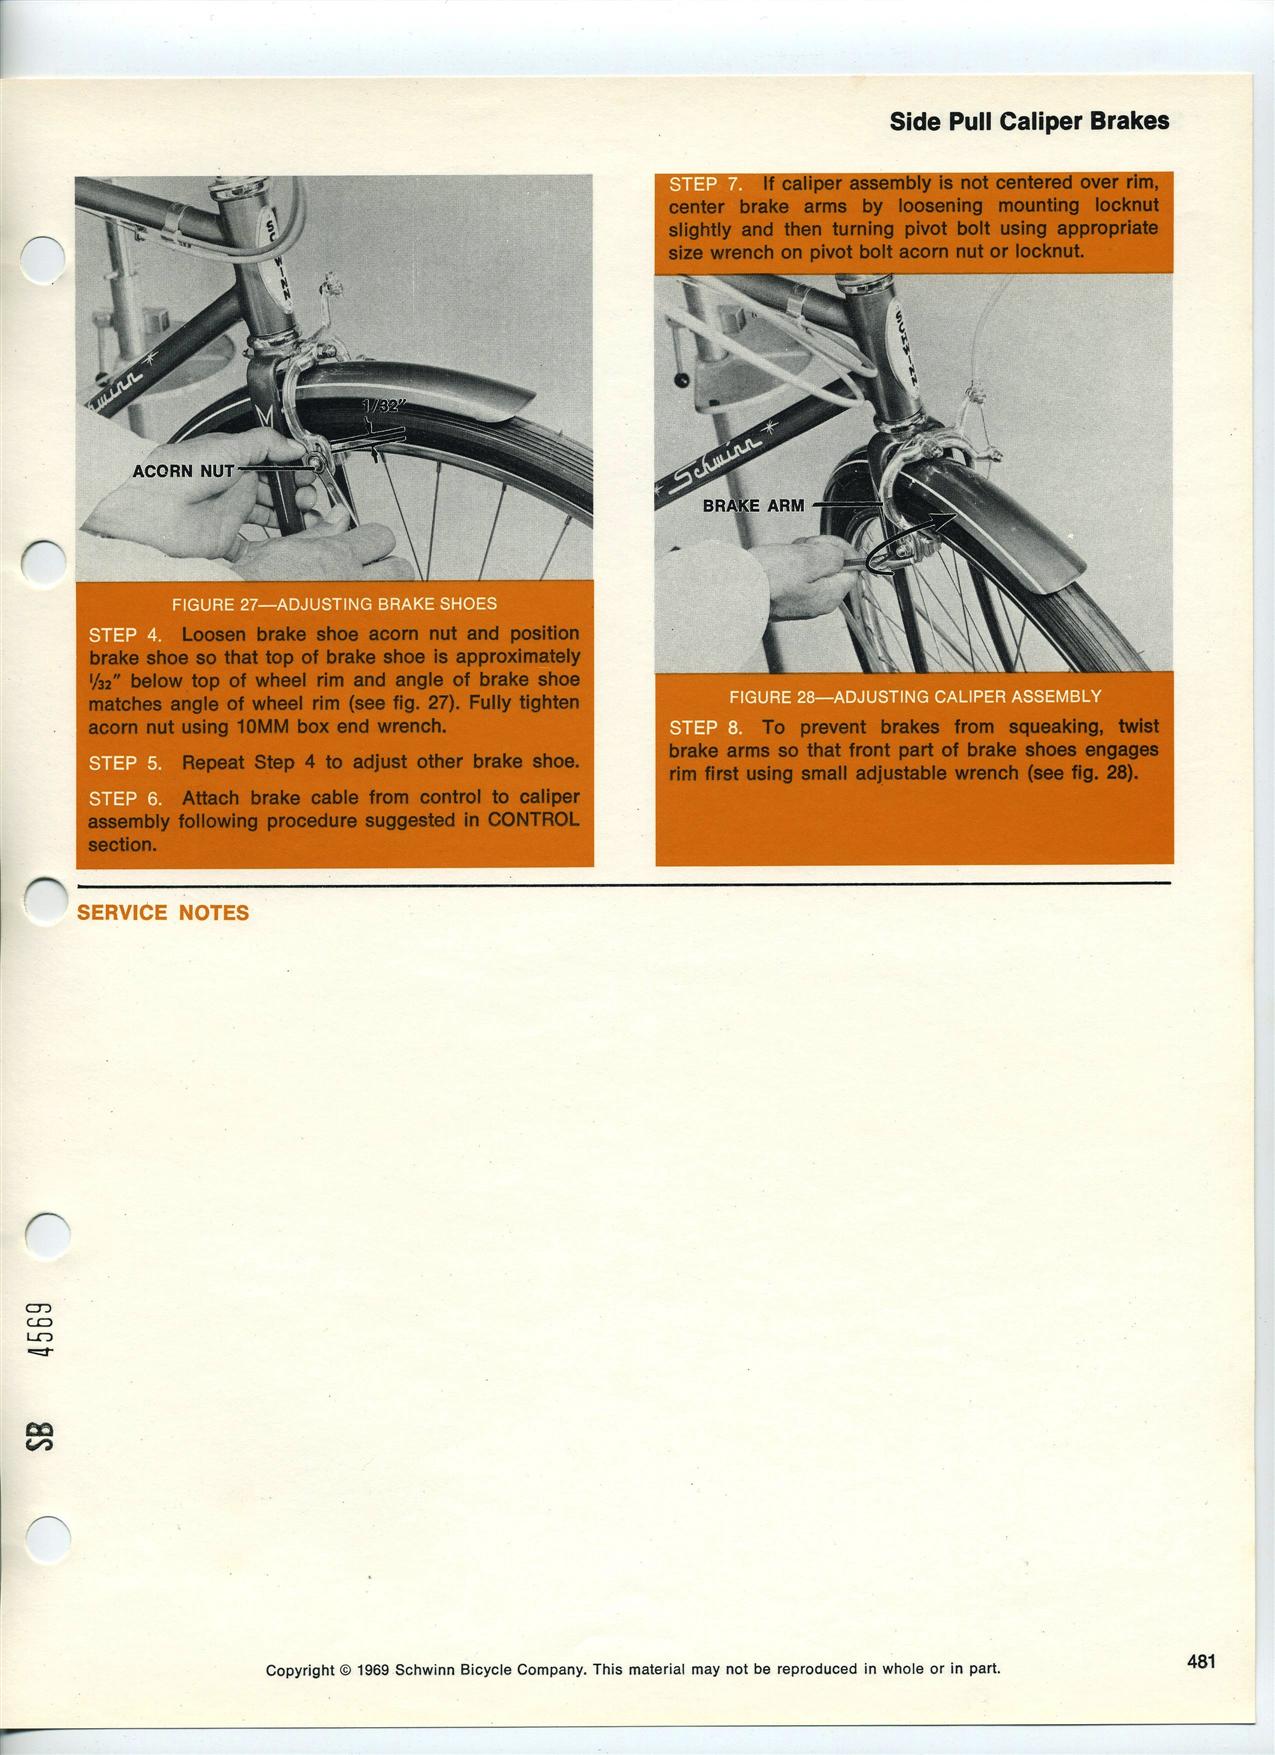  1969 Caliper Dept pg 481